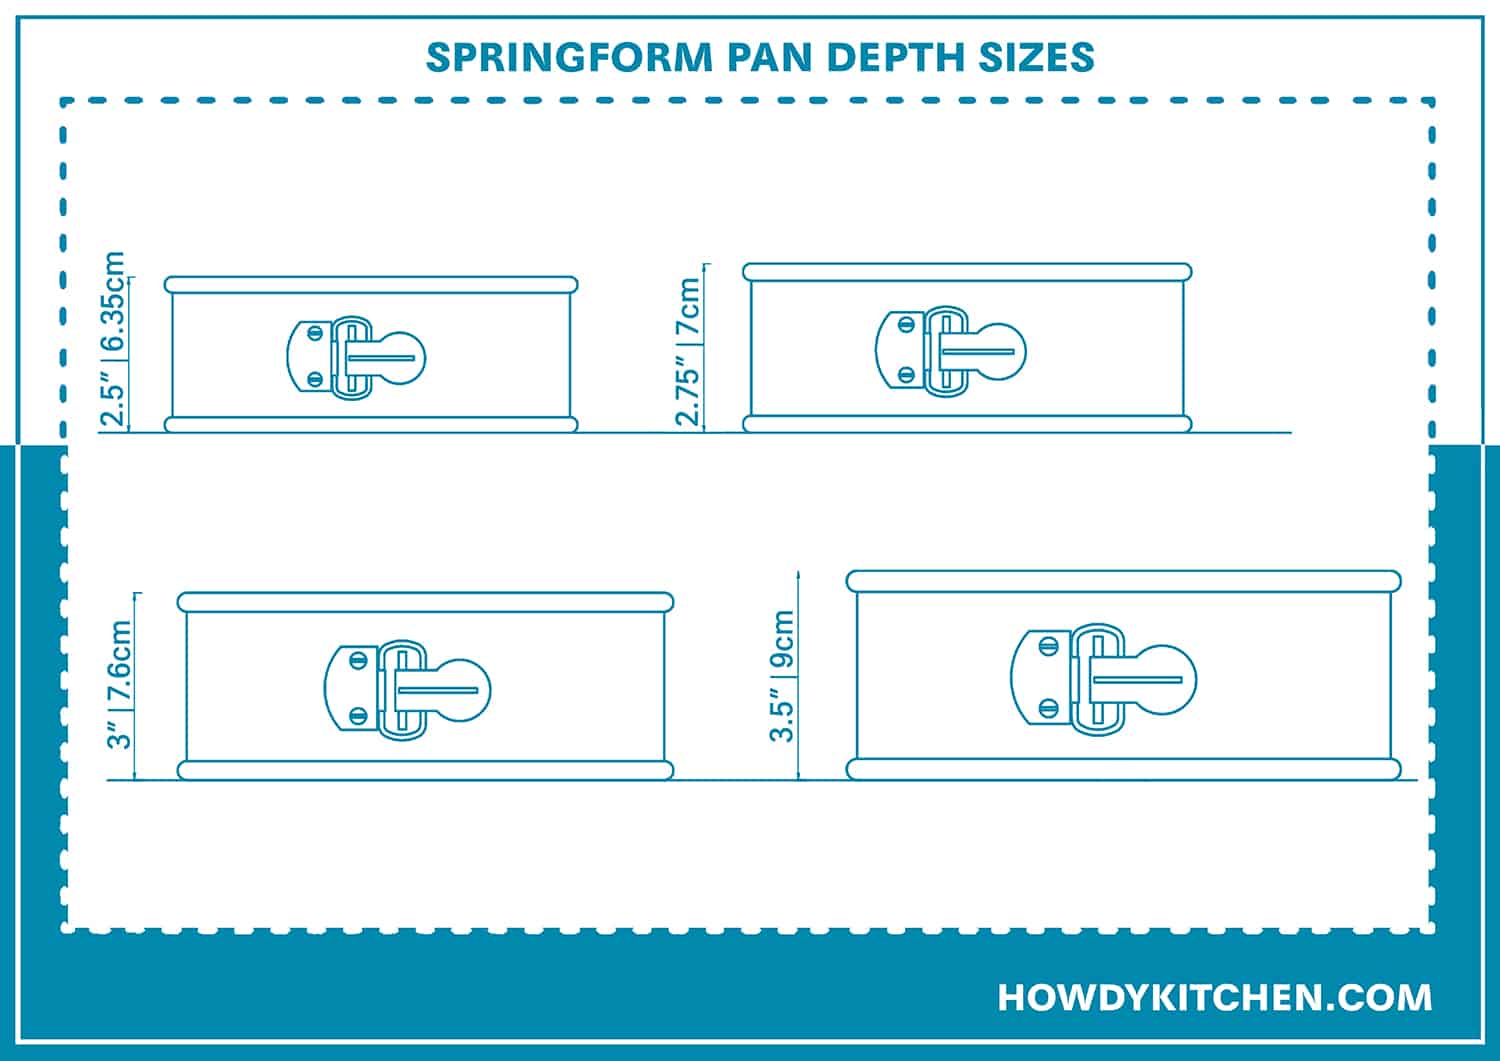 Springform Pan Depth Sizes